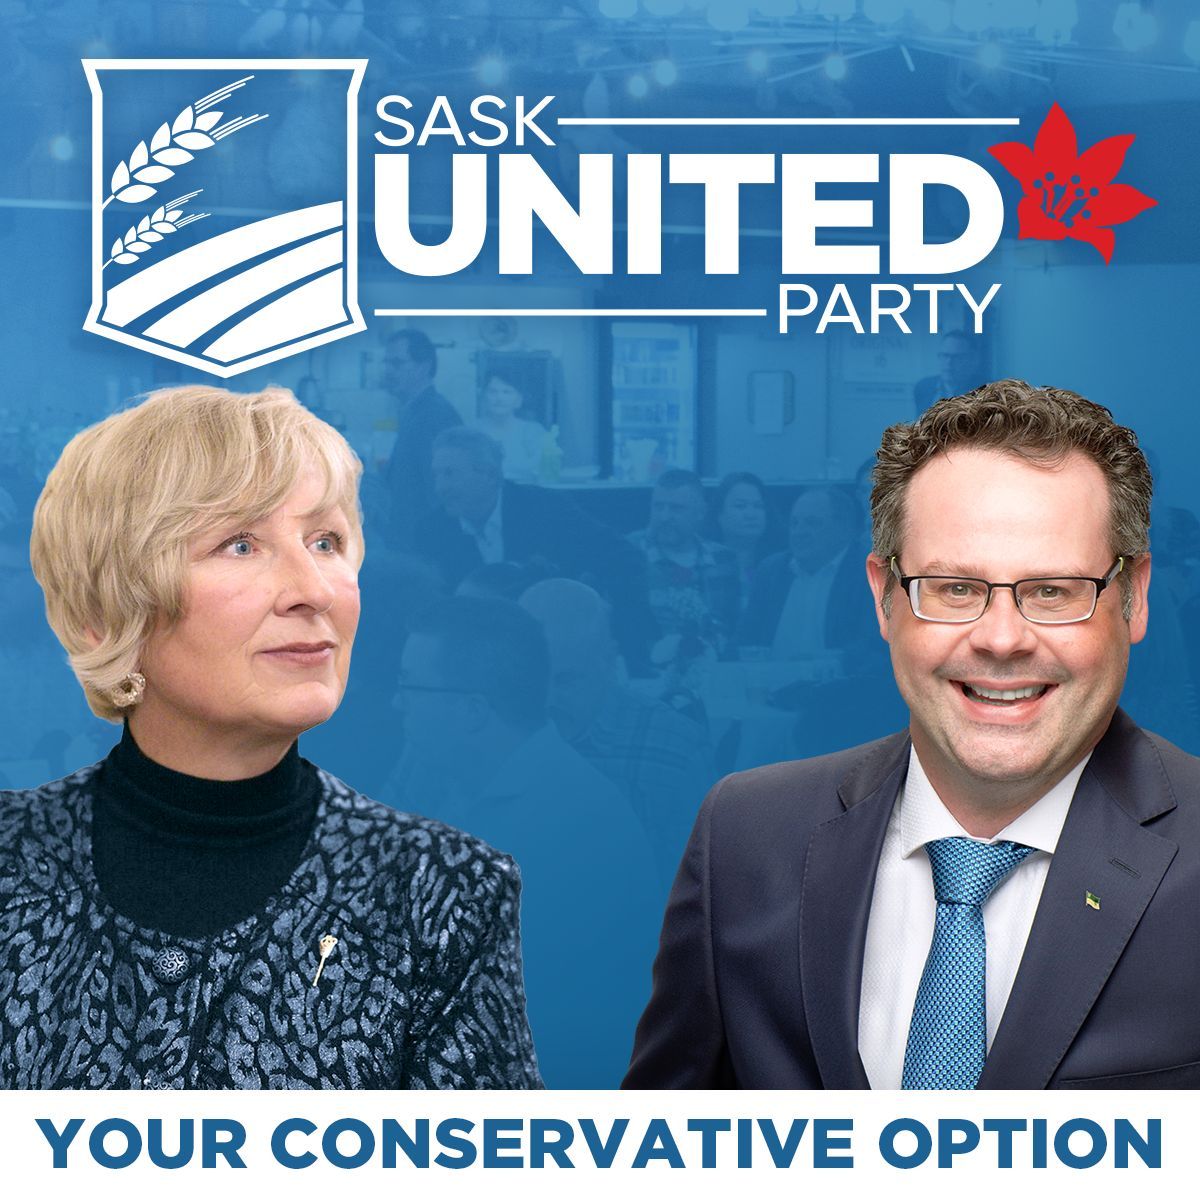 The Saskatchewan people want change.

Sask United was created to give them a common-sense conservative choice for real change.

#saskunited #skpoli #saskpoli #sask #sk #saskfirst #ruralmatters #netzero